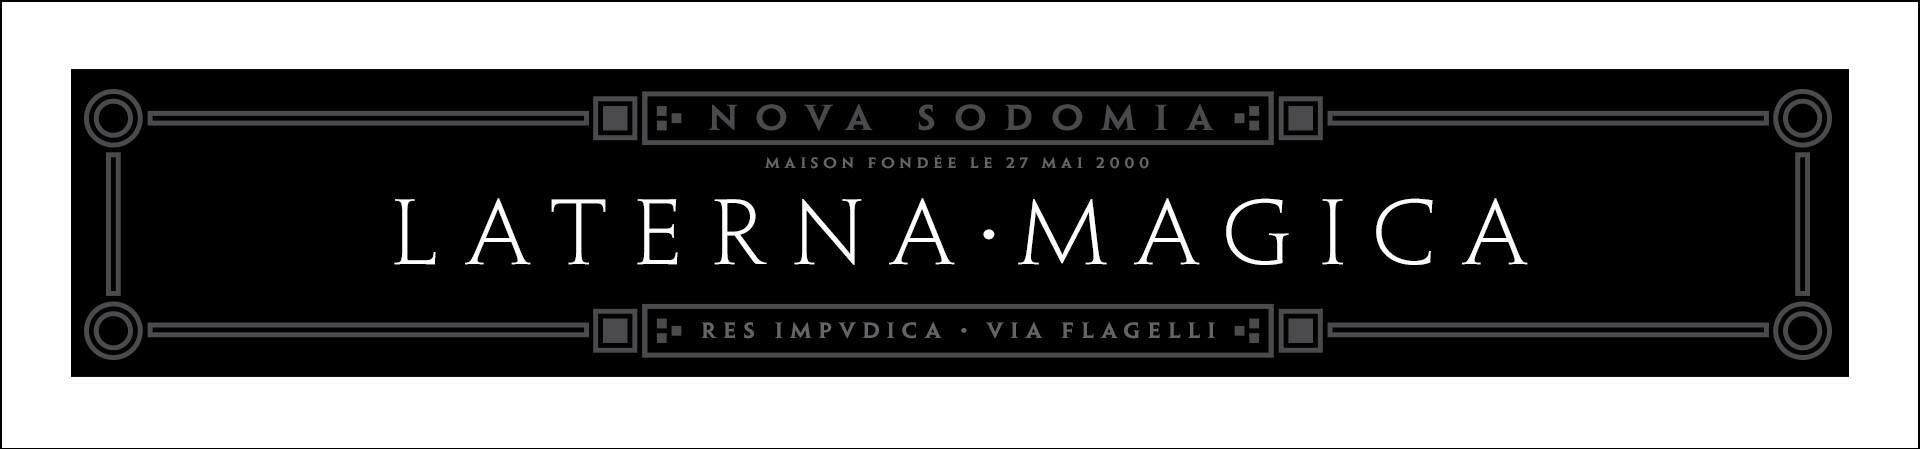 Nova Sodomia - Laterna Magica